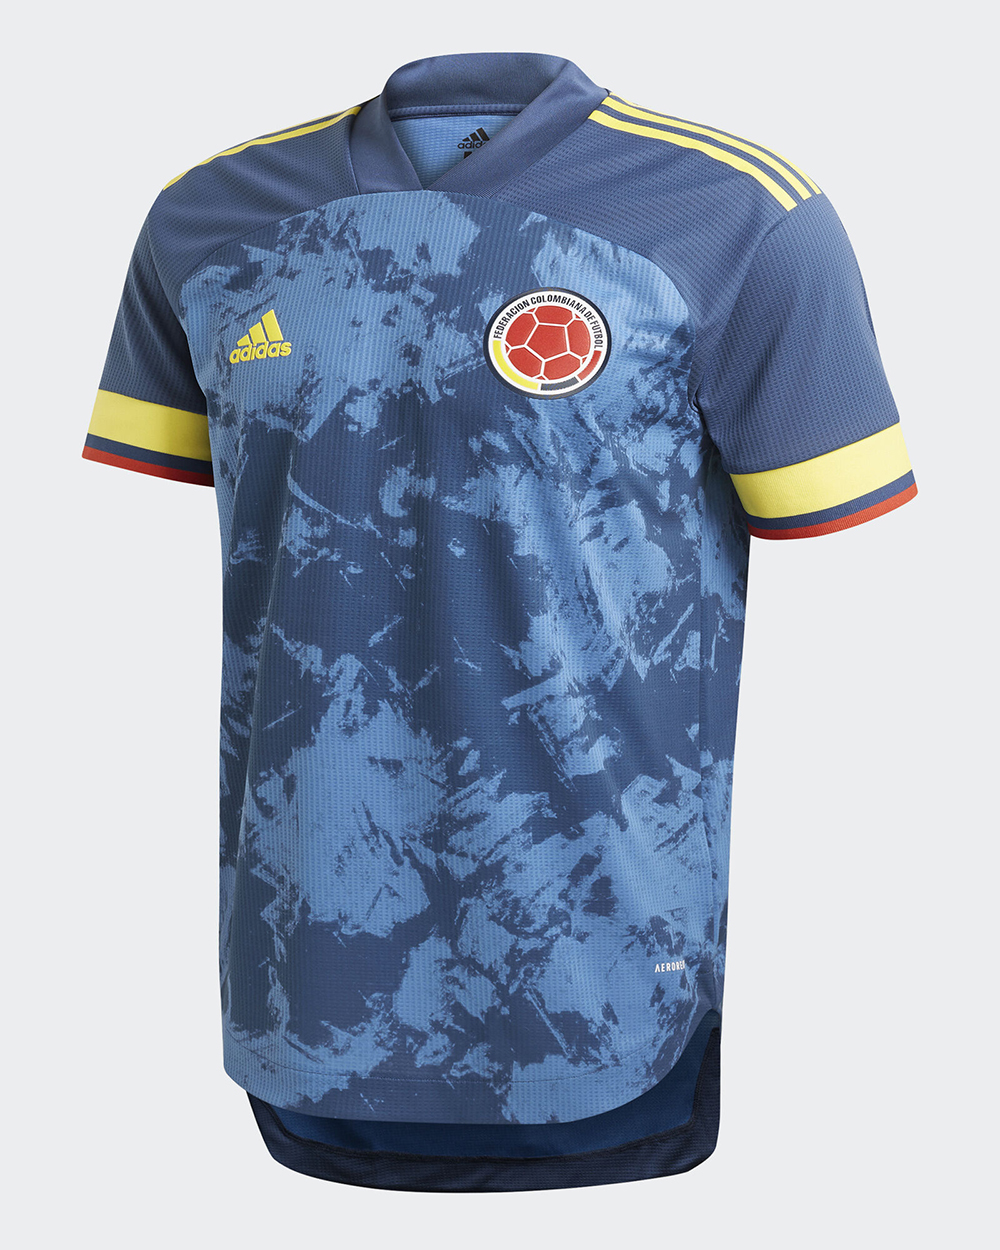 Camiseta alternativa adidas de Colombia Copa América 2020